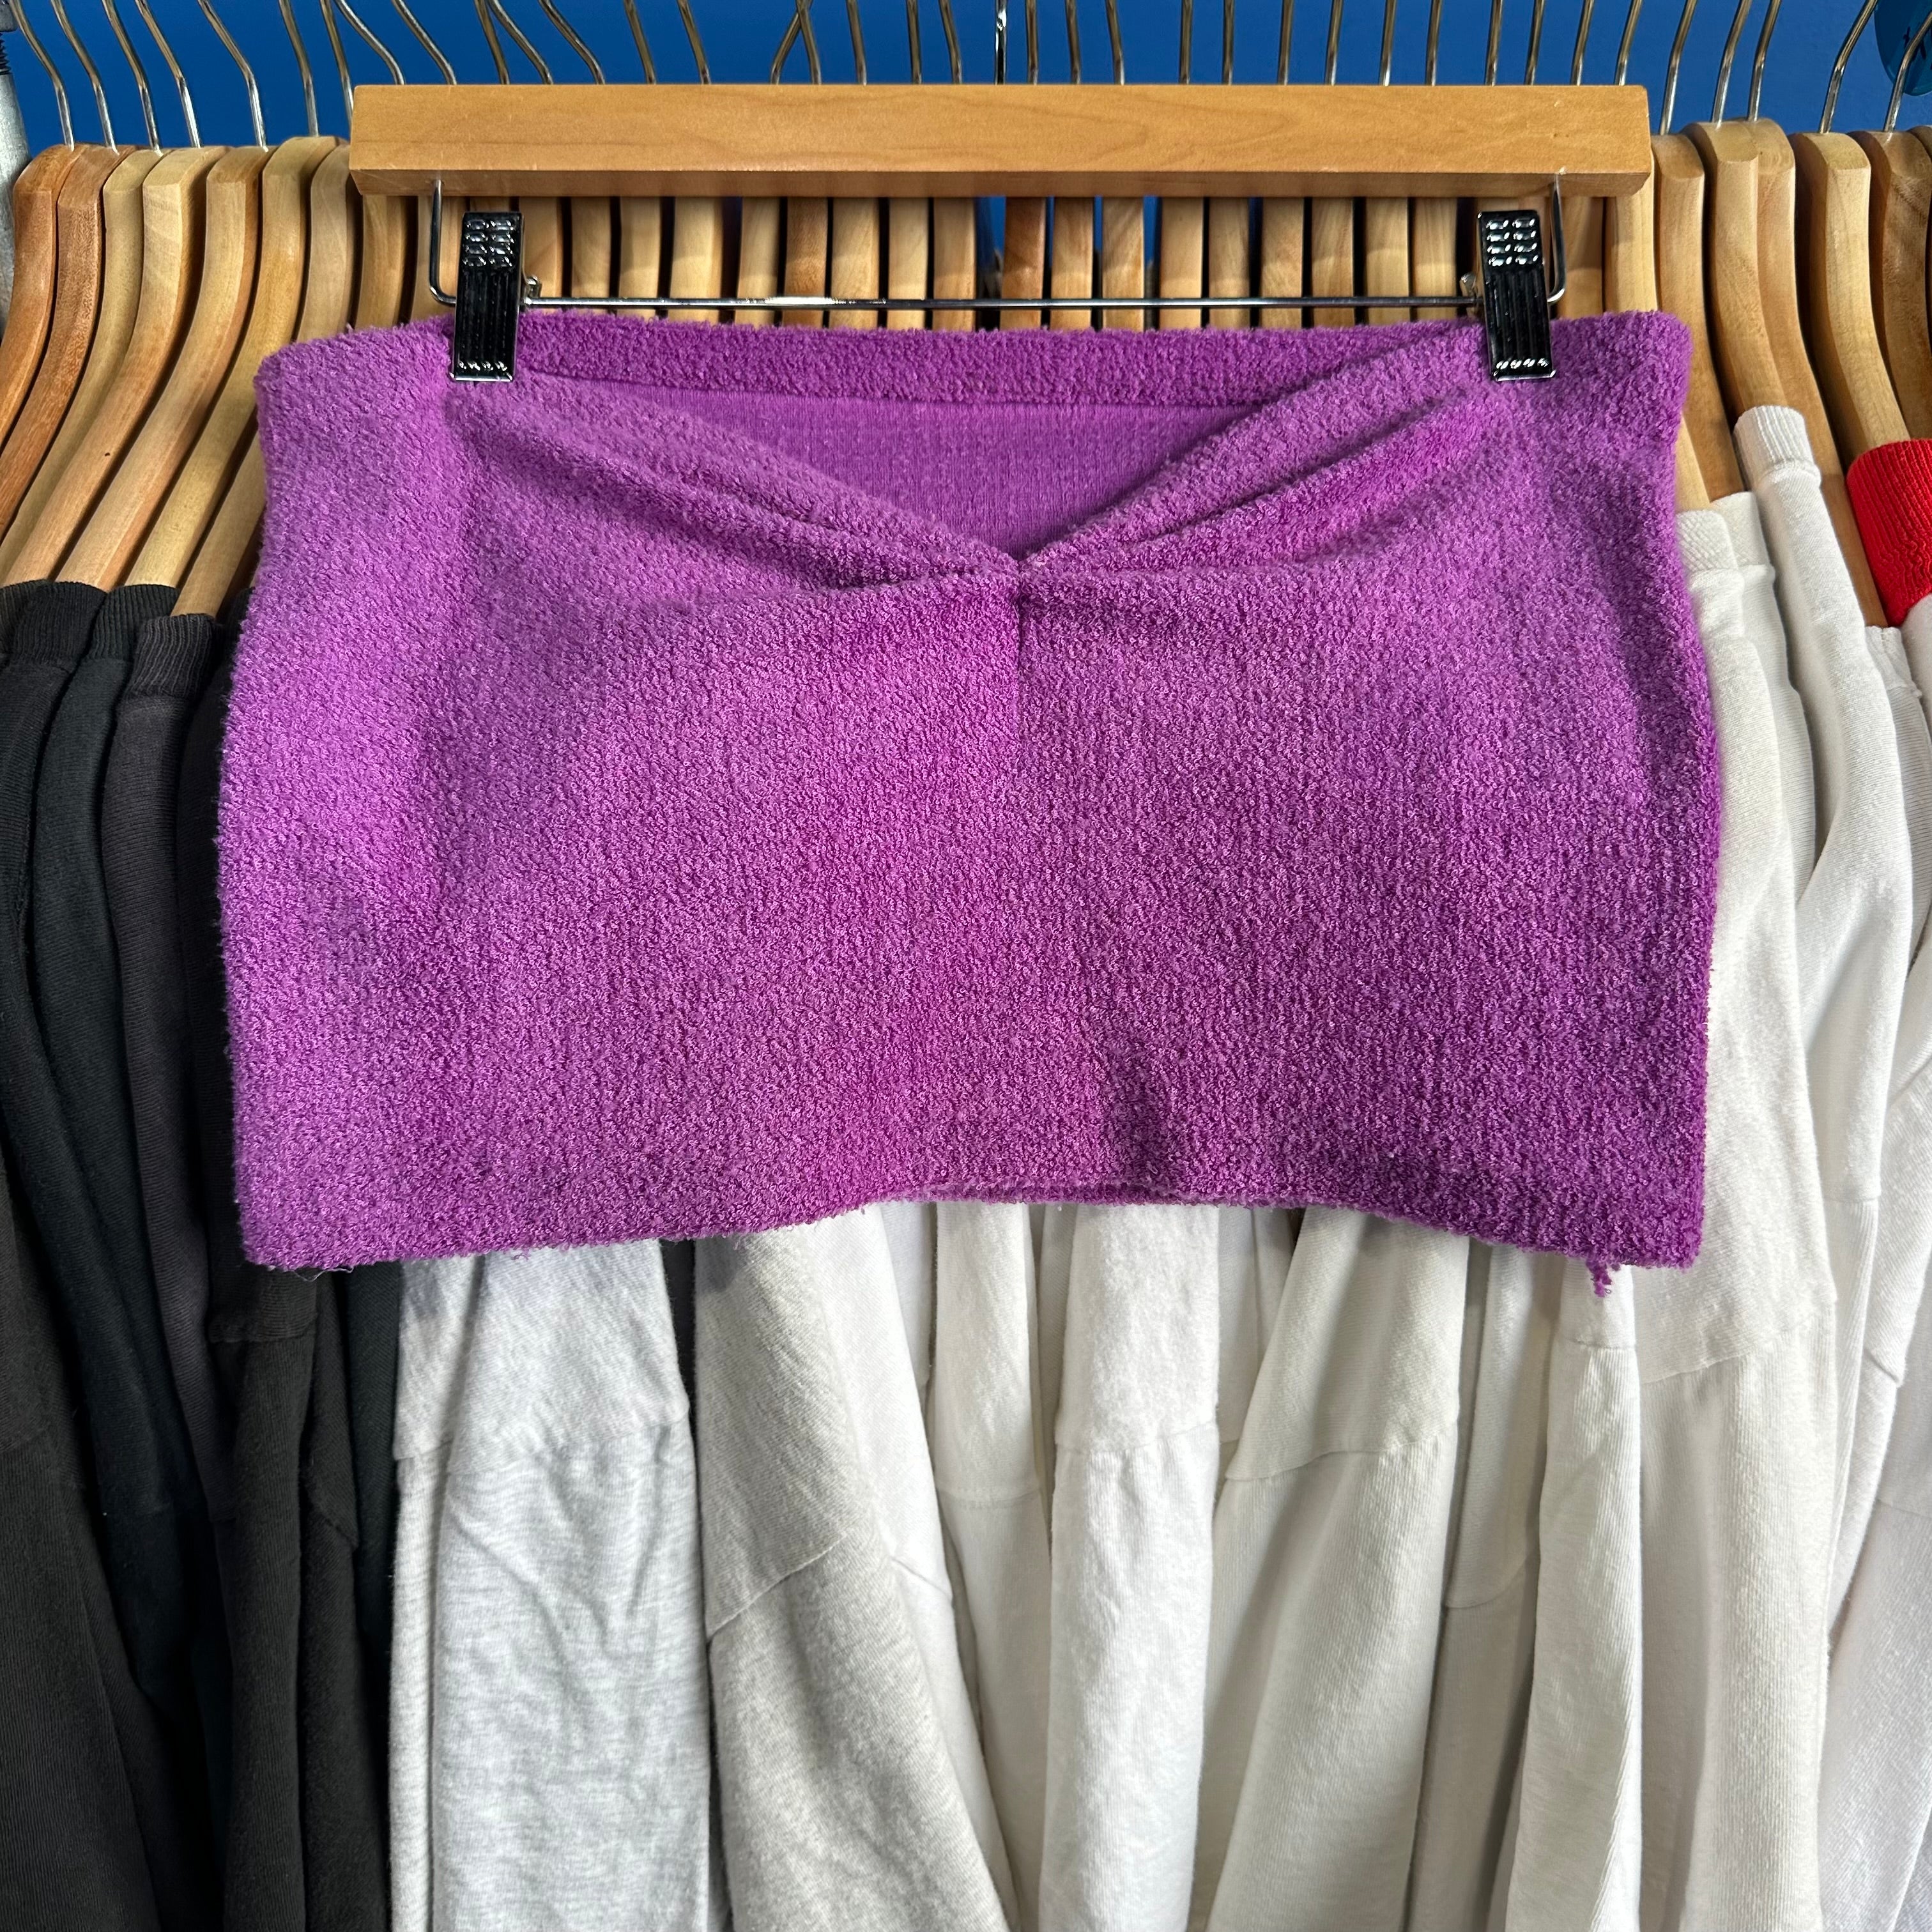 Purple Terry-Cloth-Like Tube Top